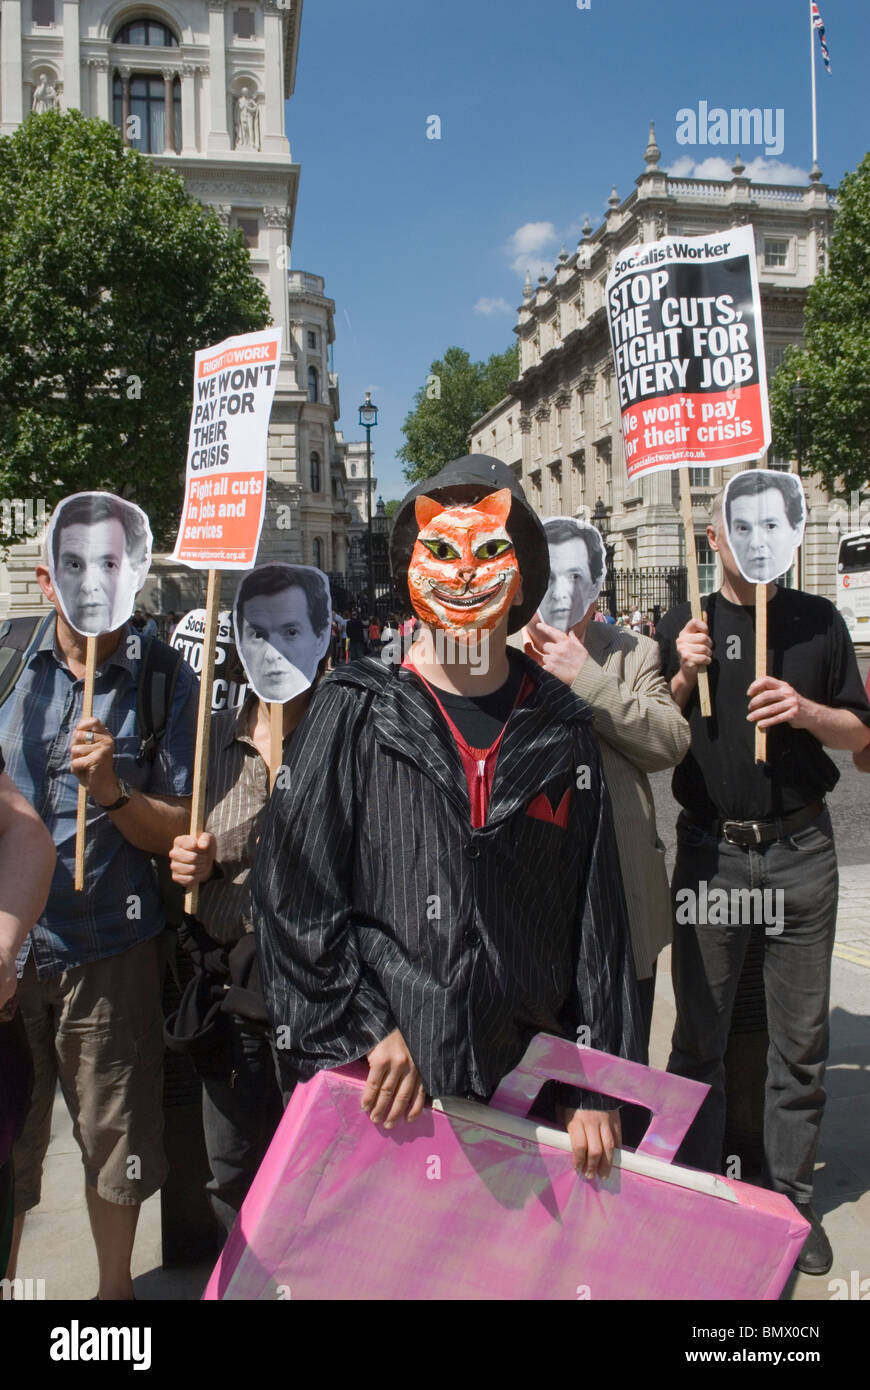 George Osborne "Fat Cat" ersten Haushalt Tag. Koalition-Regierung-Demonstration vor Downing Street London UK HOMER SYKES Stockfoto